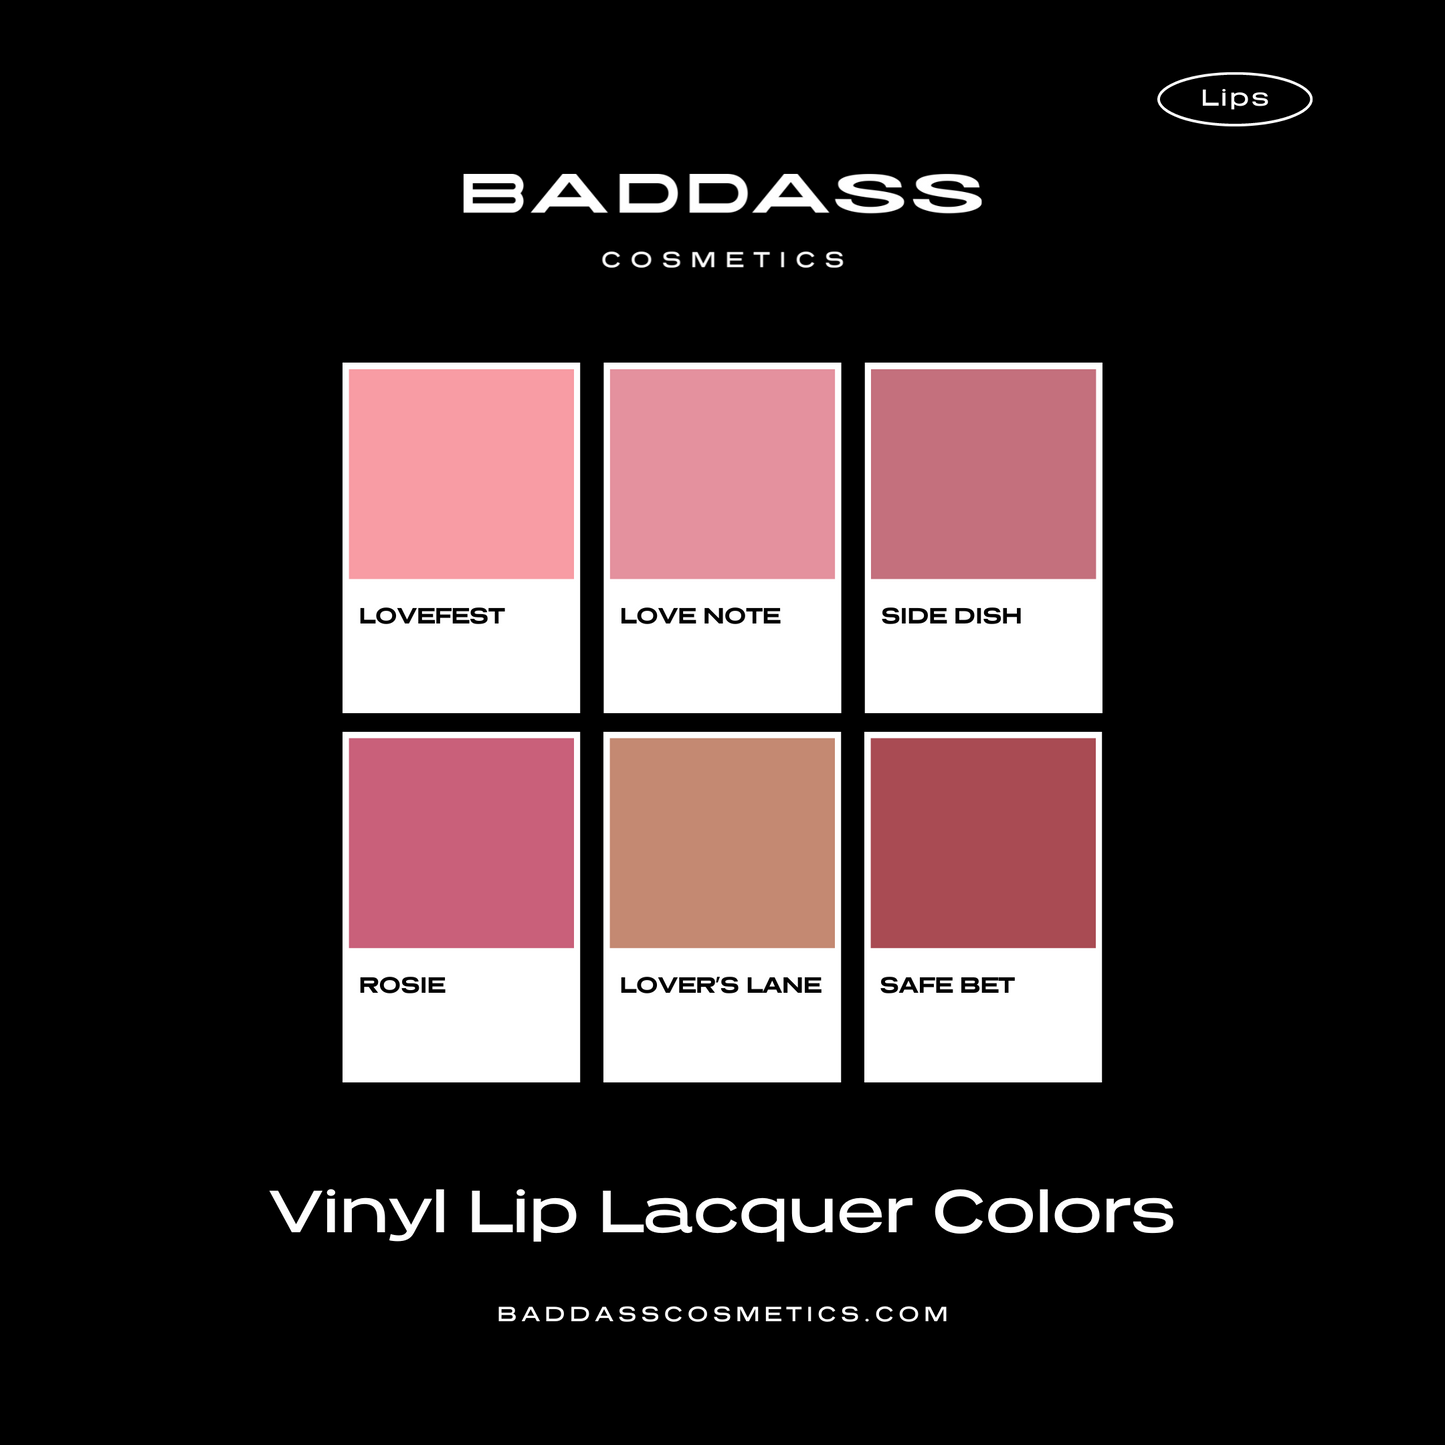 Baddass Vinyl Lip Lacquer